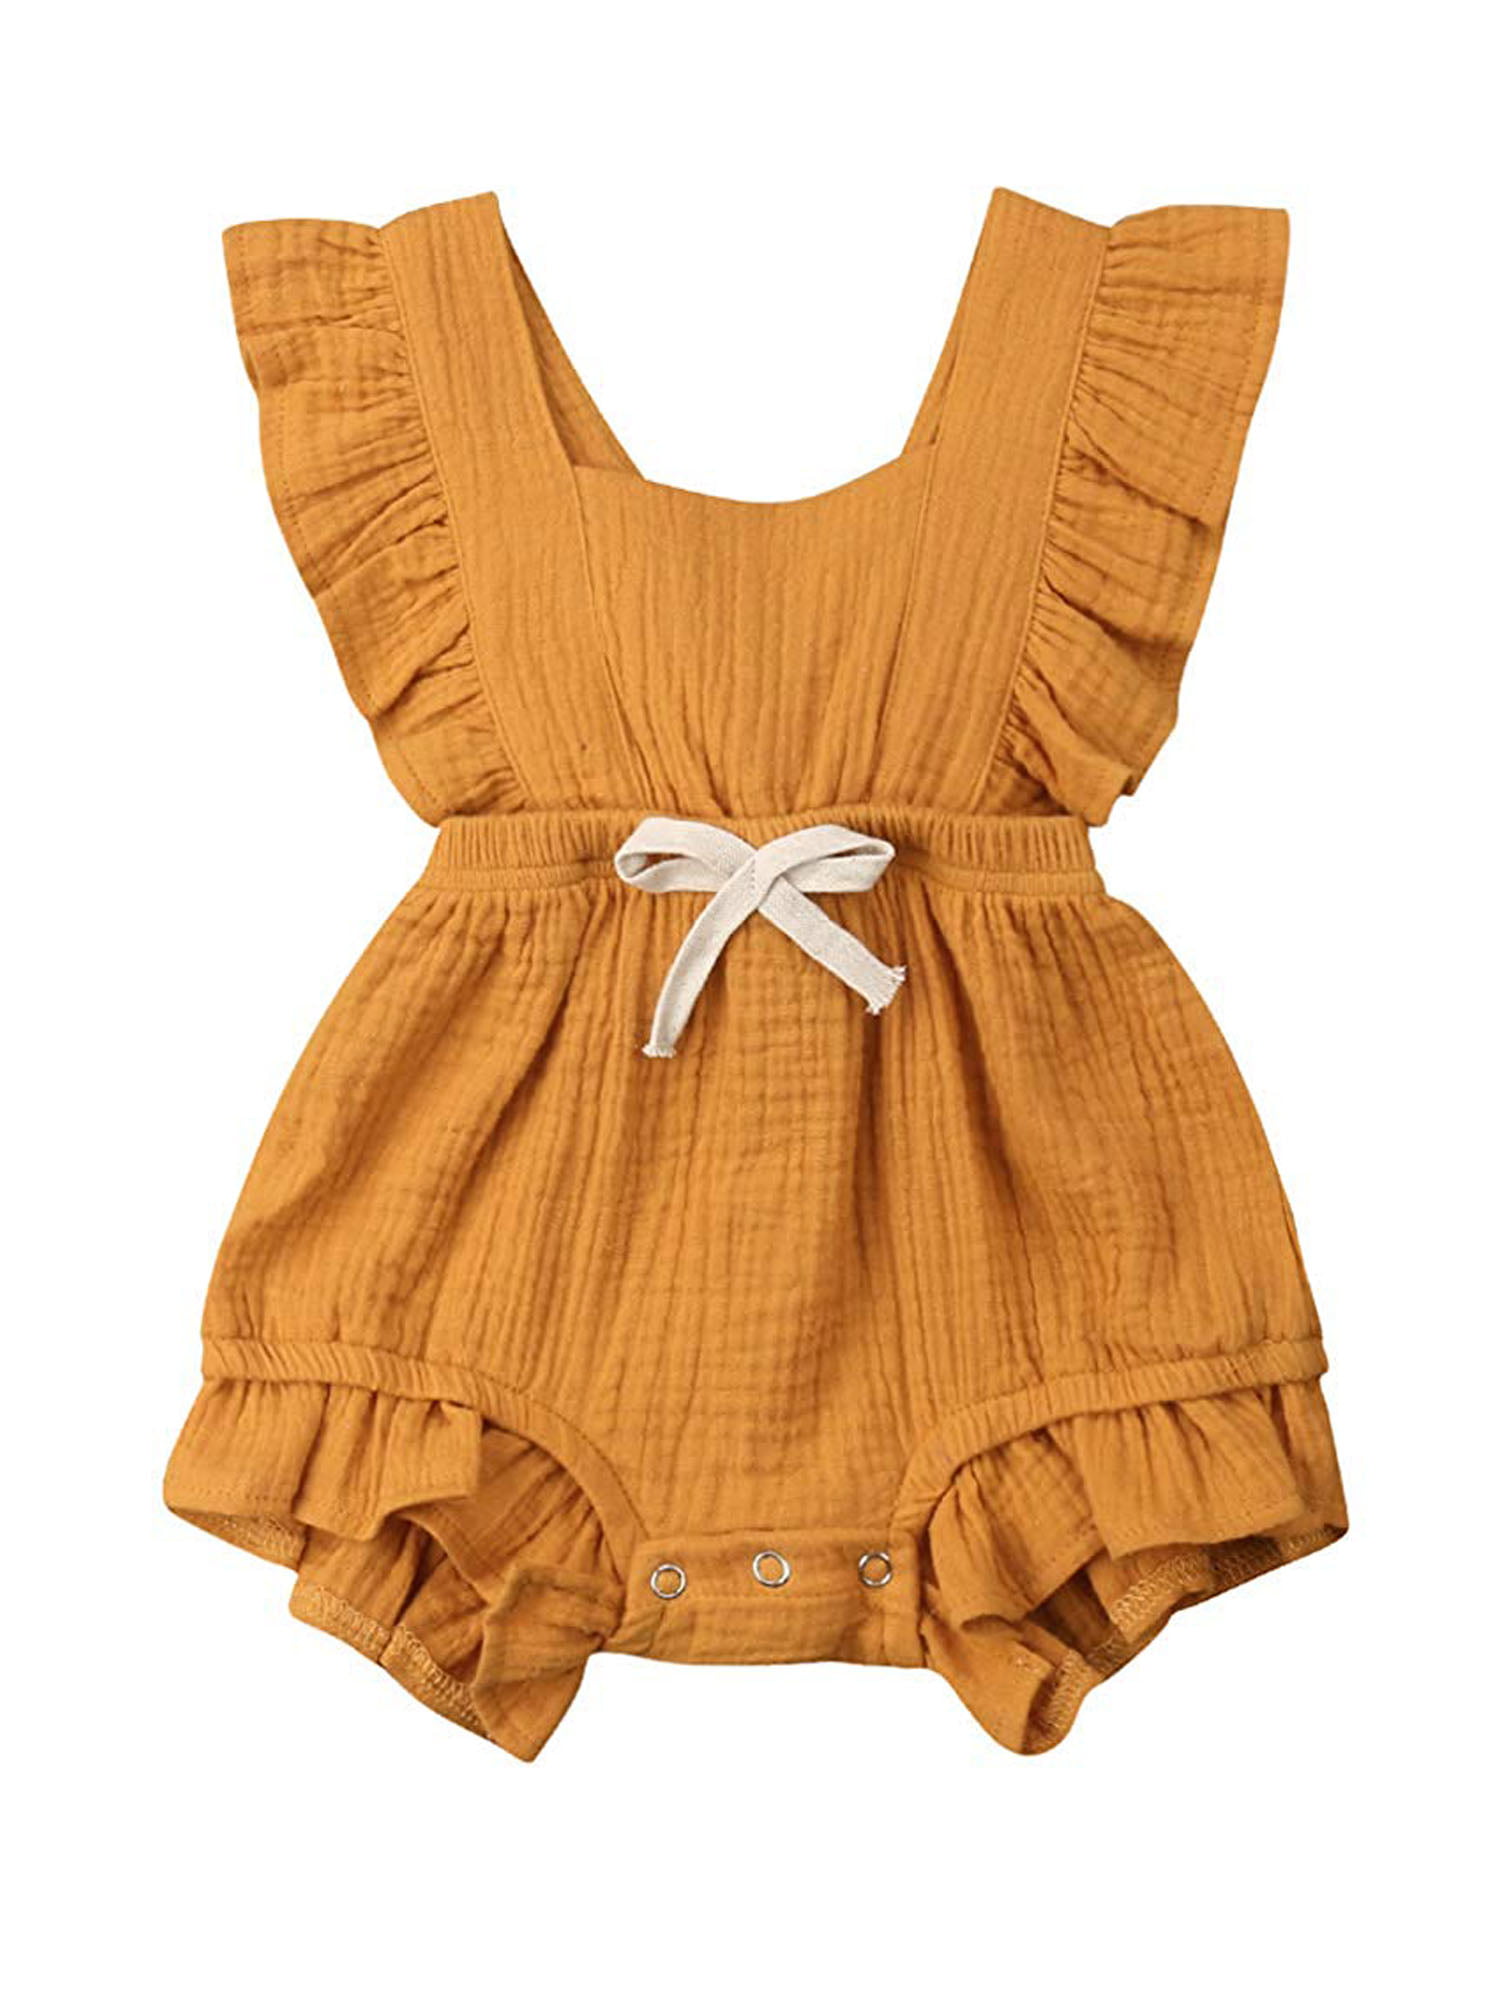 Newborn Baby Girl Ruffle Romper Bodysuit Jumpsuit Summer Outfits Clothes Sunsuit